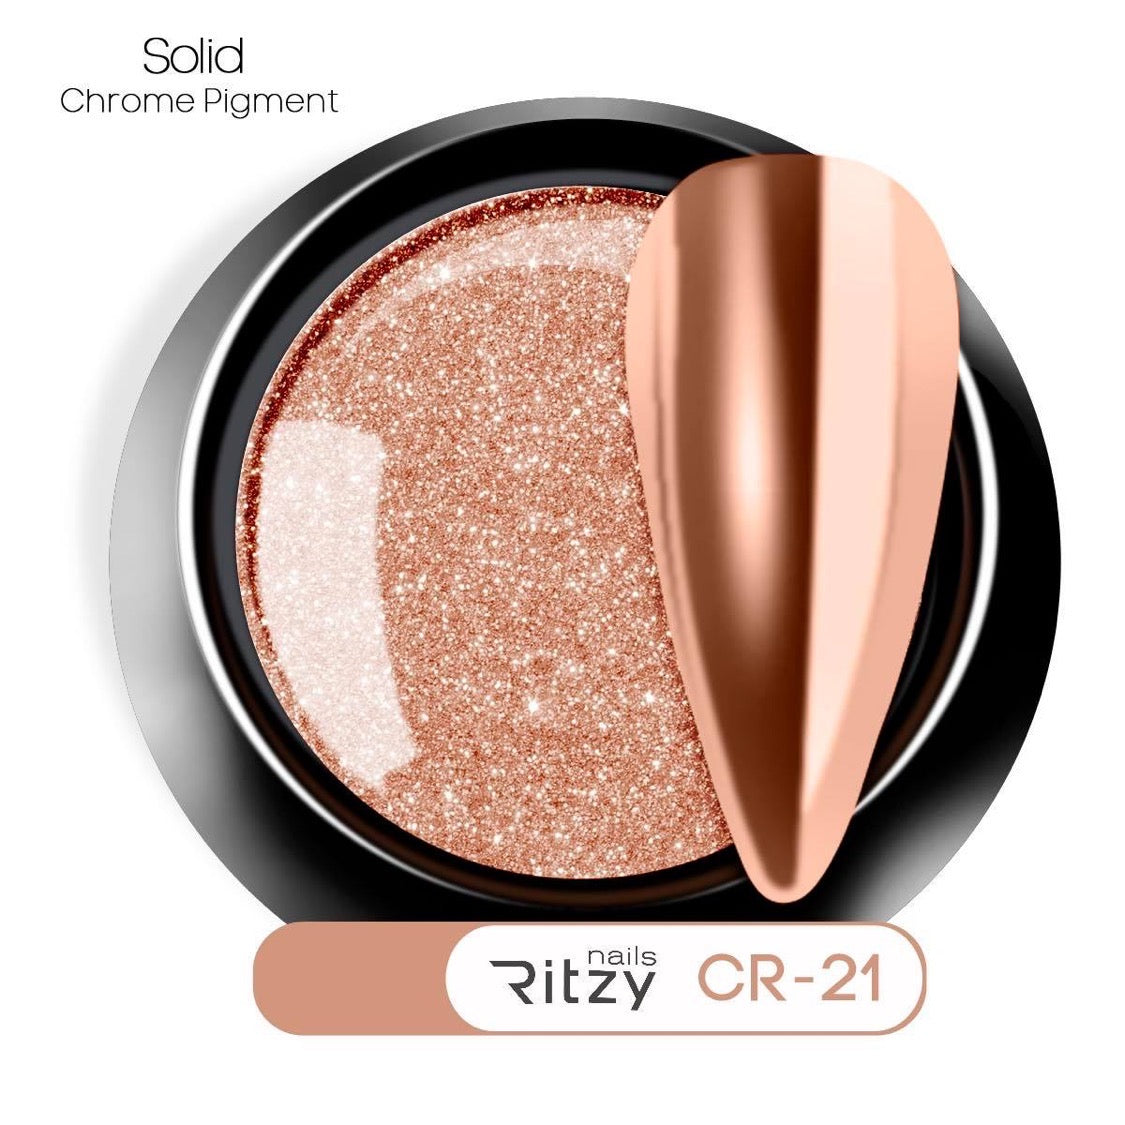 Chrome pigment CR-21